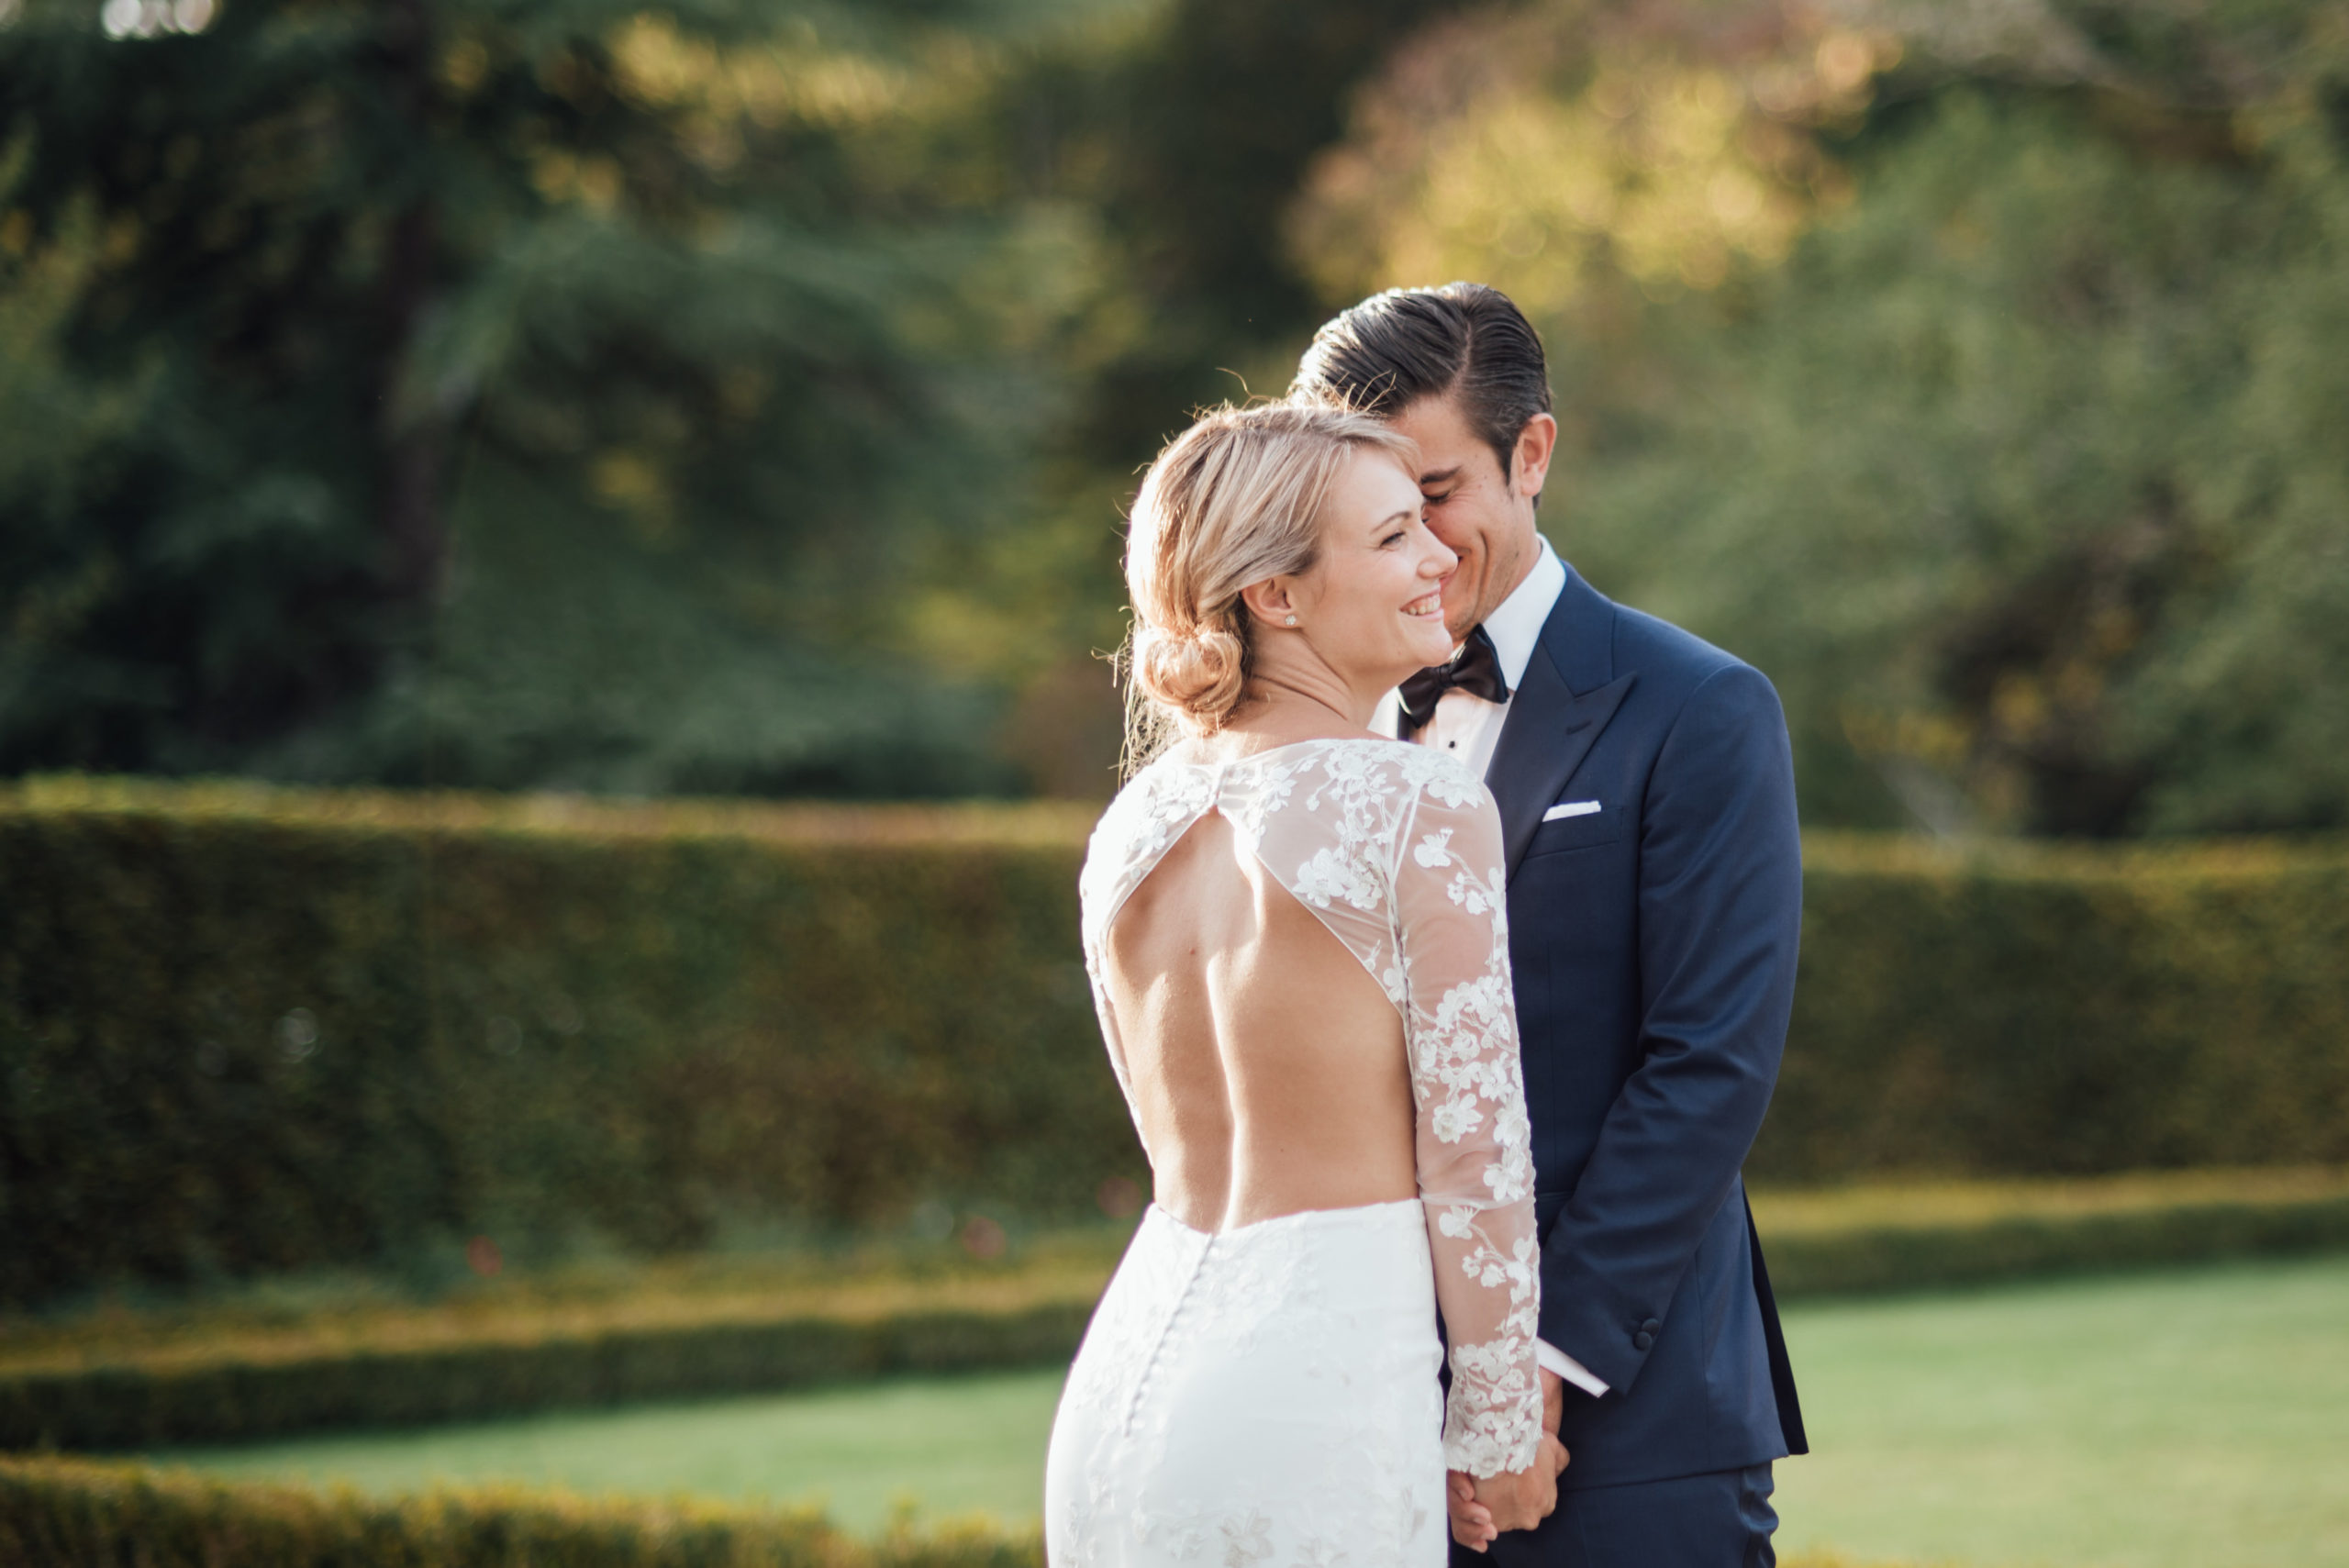 Destination Wedding France photographer - Kristof and Eva Get Married in Le Manoir de Clenord